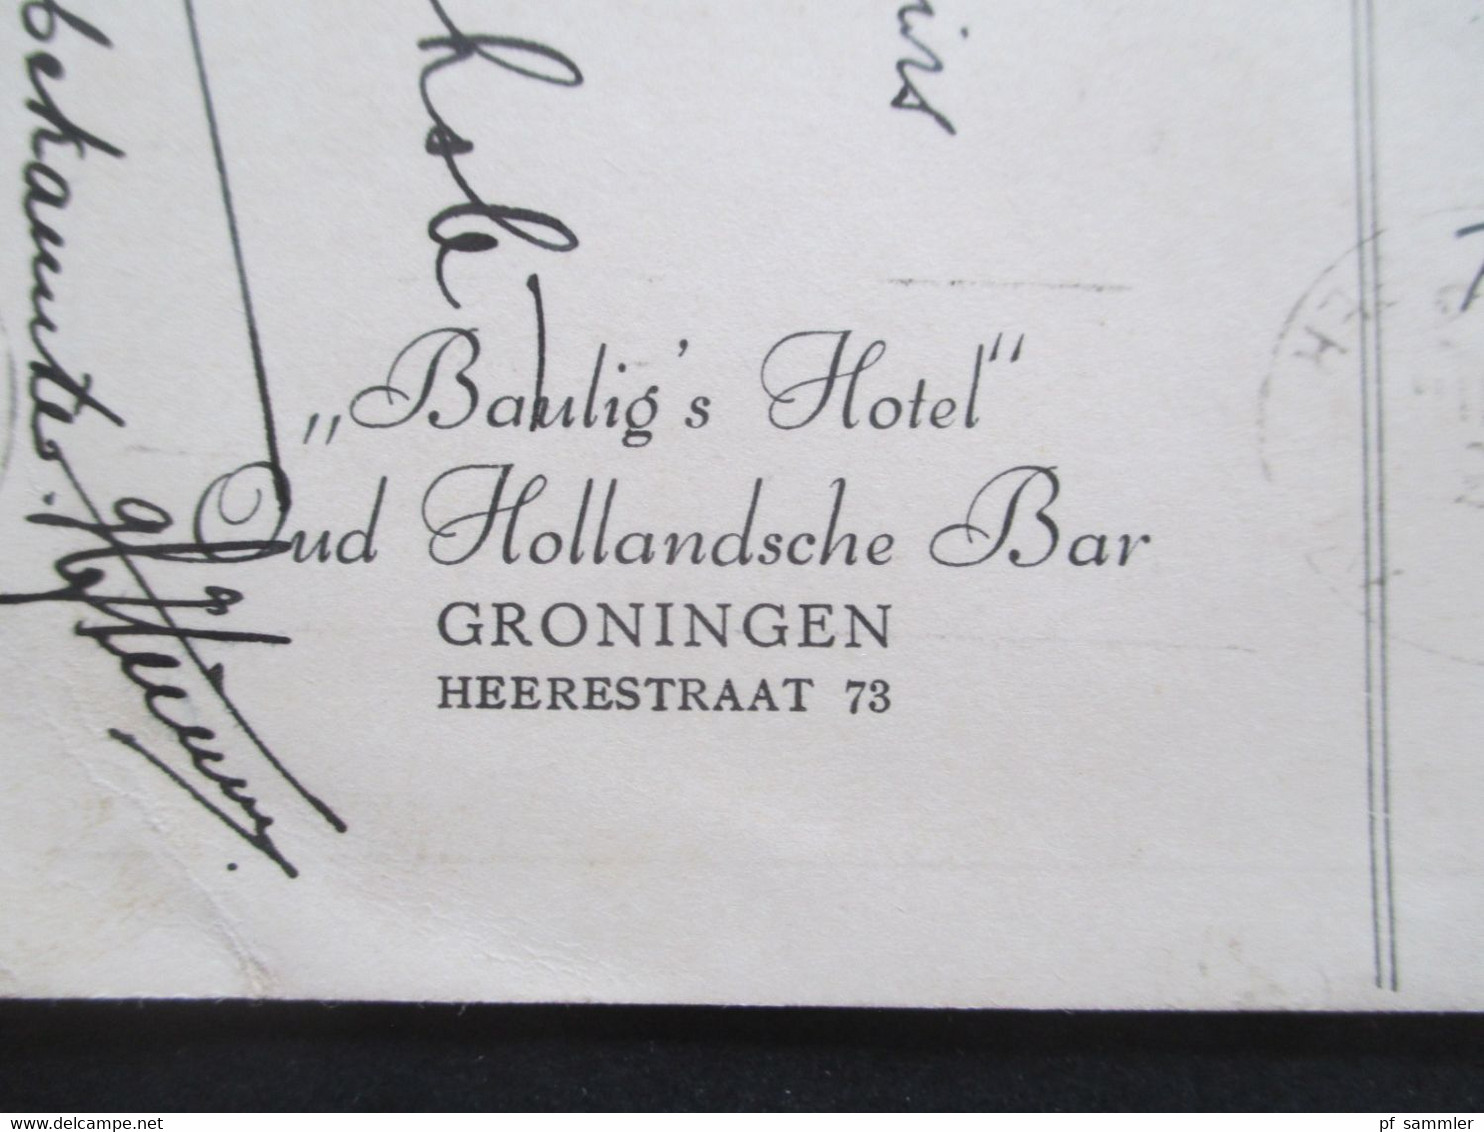 Niederlande 1939 AK Bist Du Traurig Geh Zu Baulig. Bist Du Froh Tuh Ebenso. Baulig's Hotel Oud Hollandsche Bar Groningen - Hotels & Gaststätten